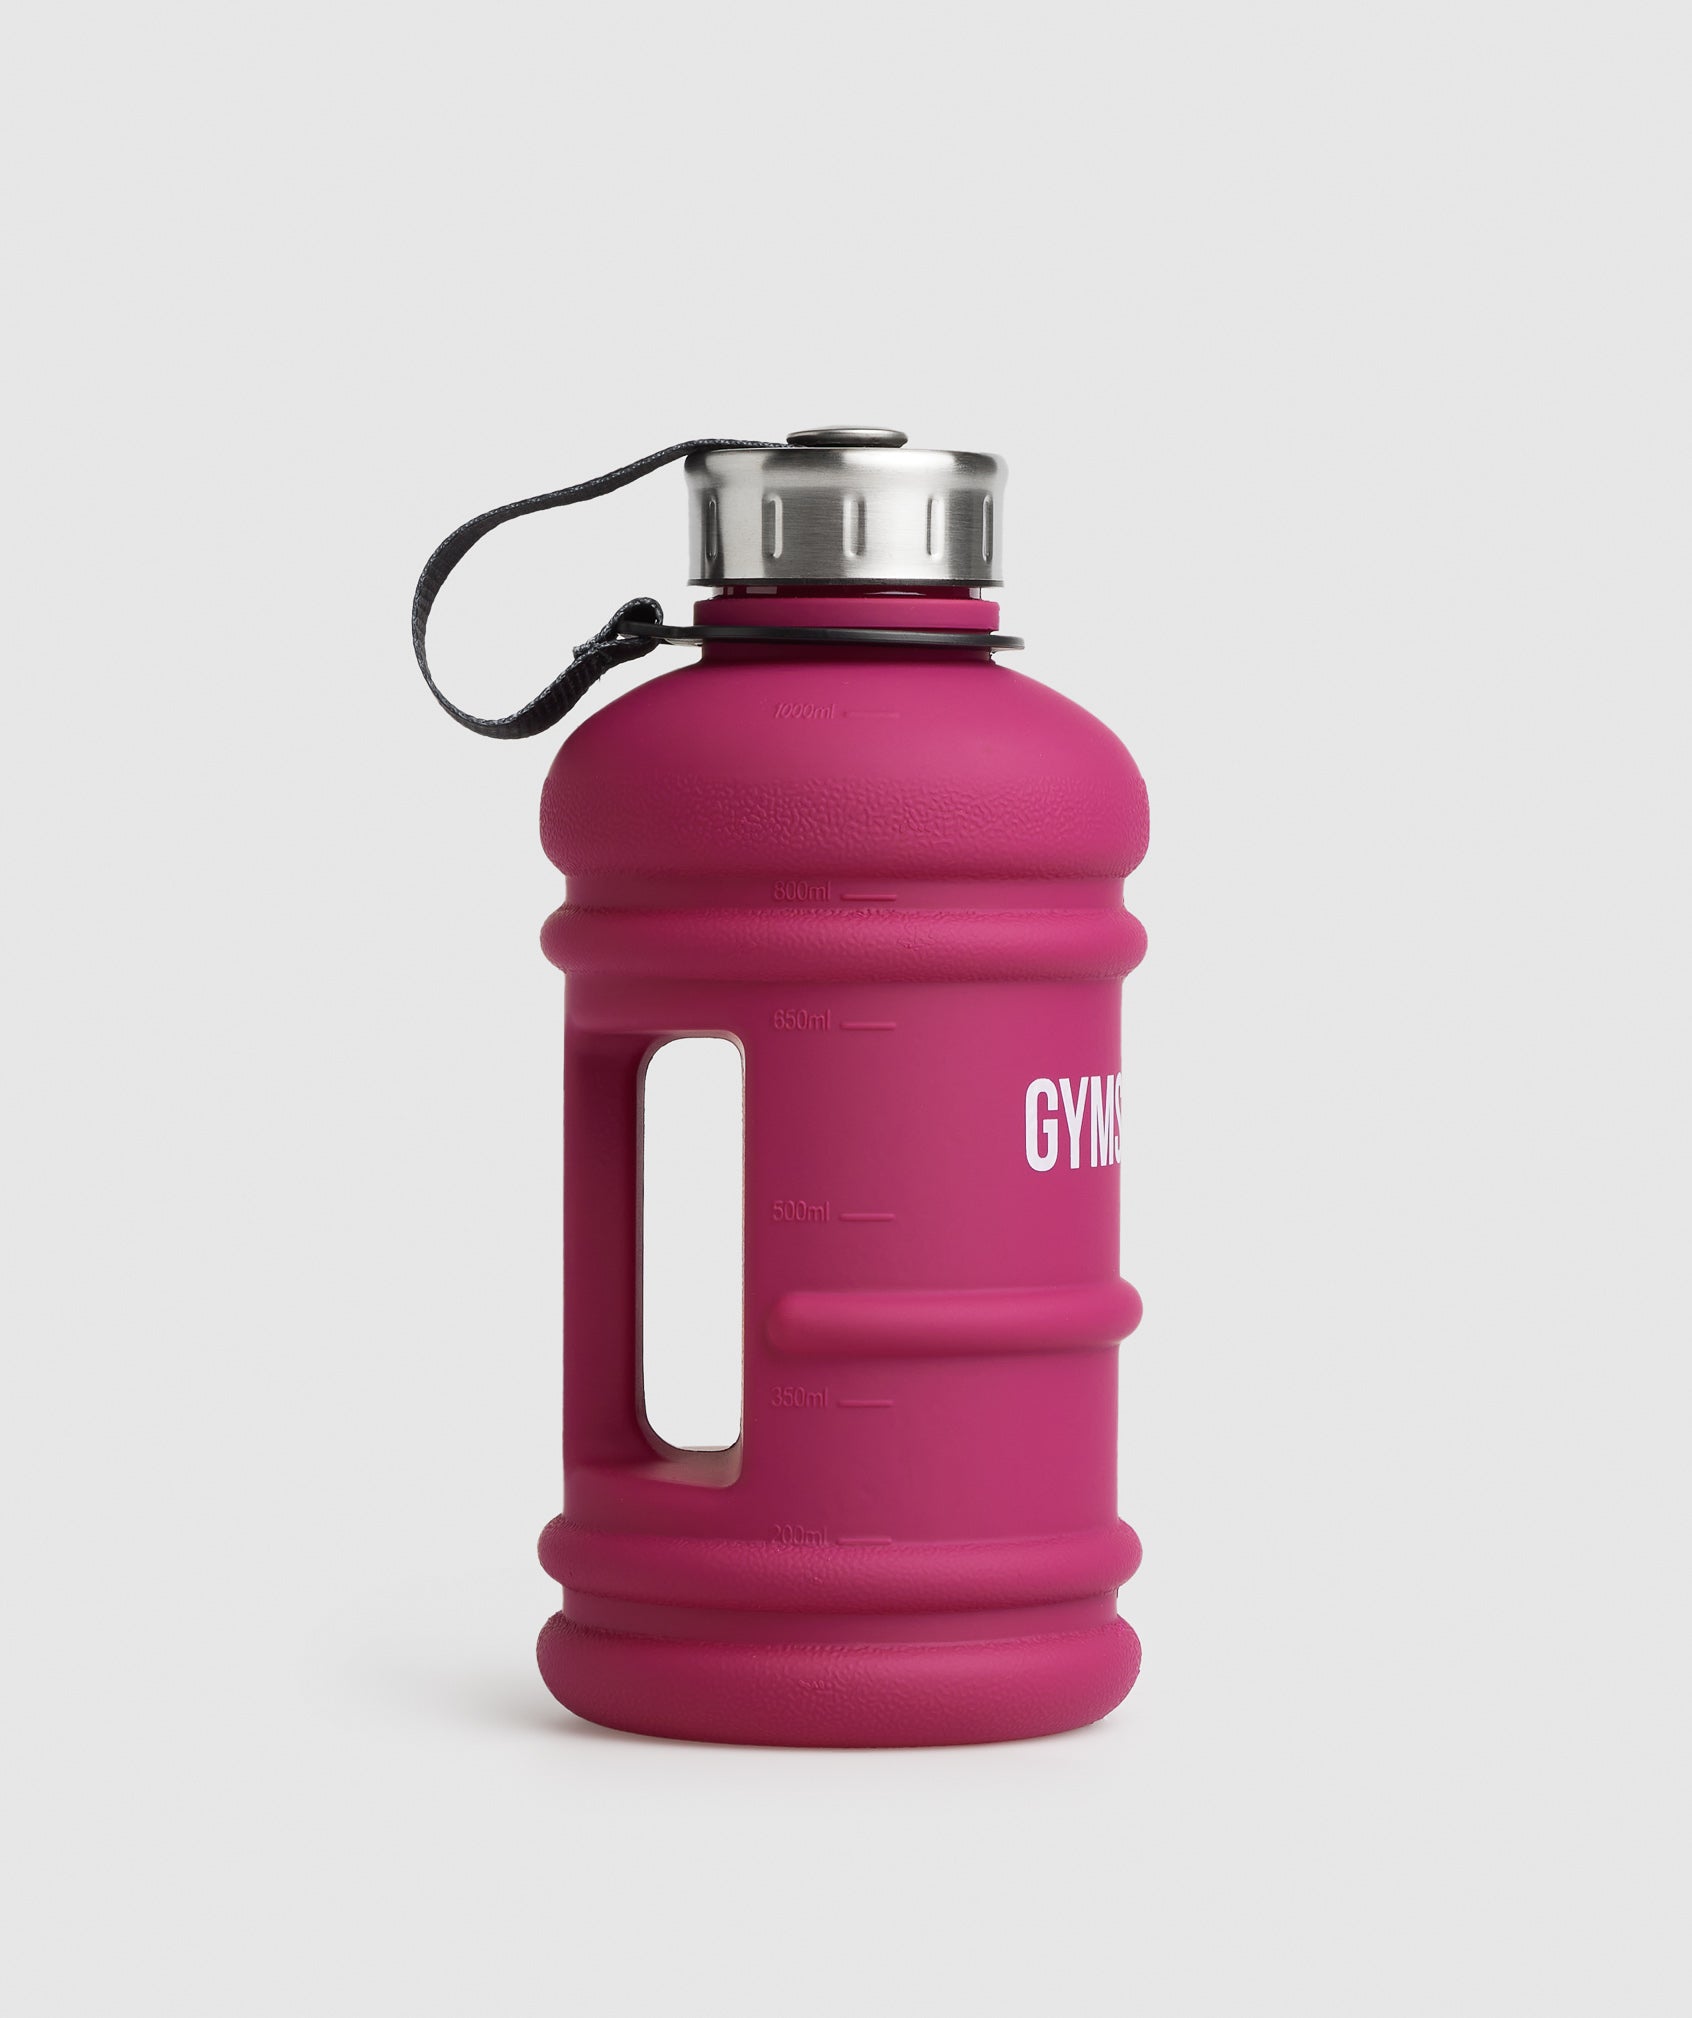 1 liter Water Bottle in Raspberry Pink - view 2